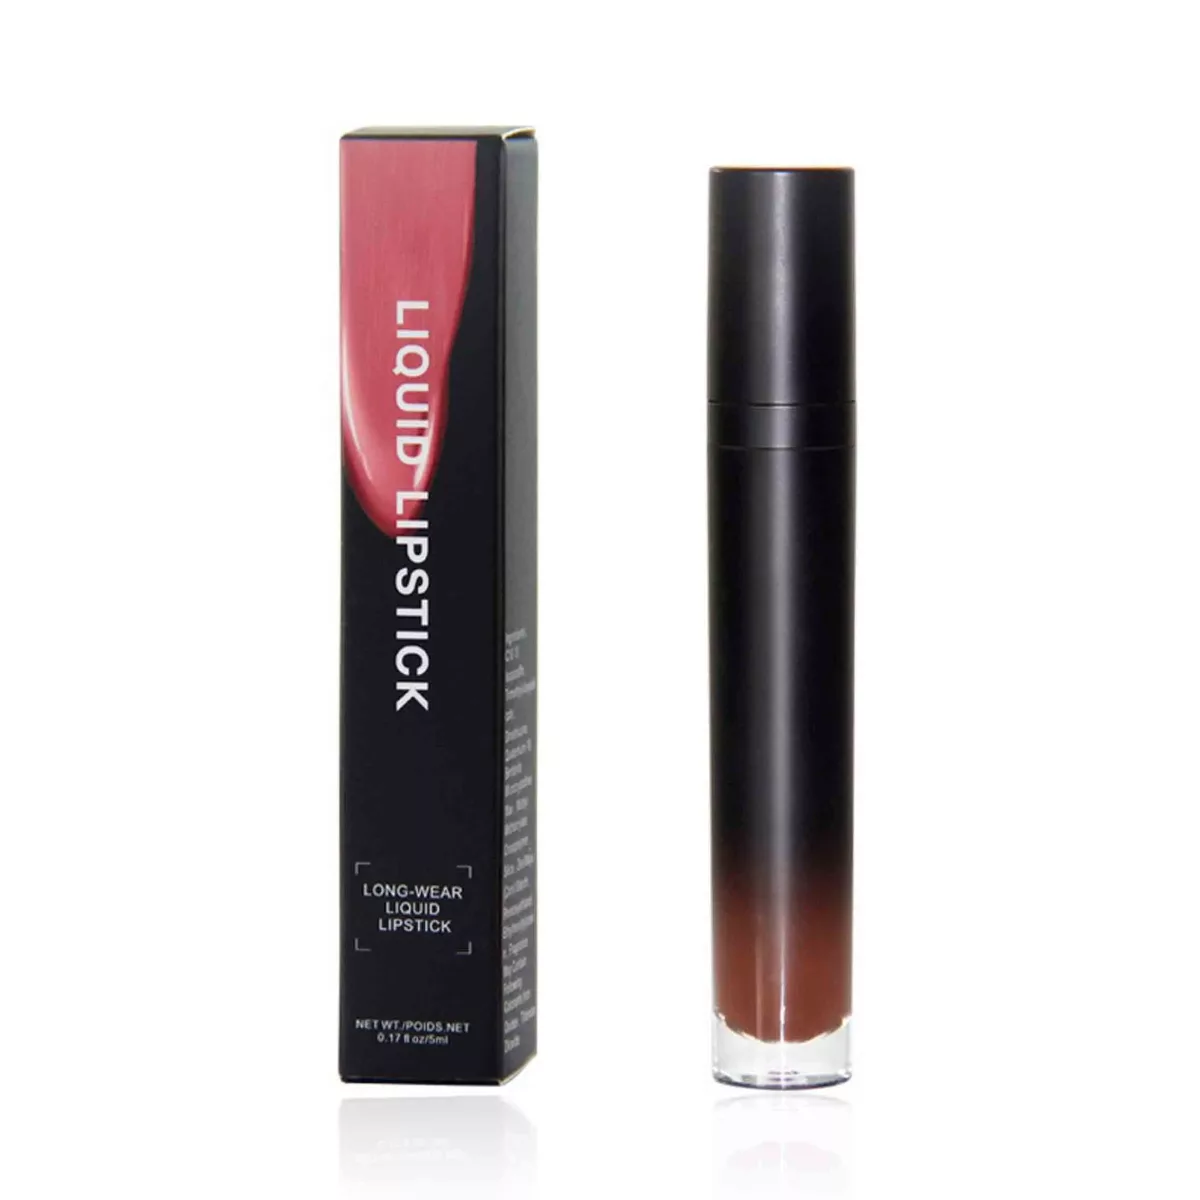 Long-Wear Liquid Lipstick